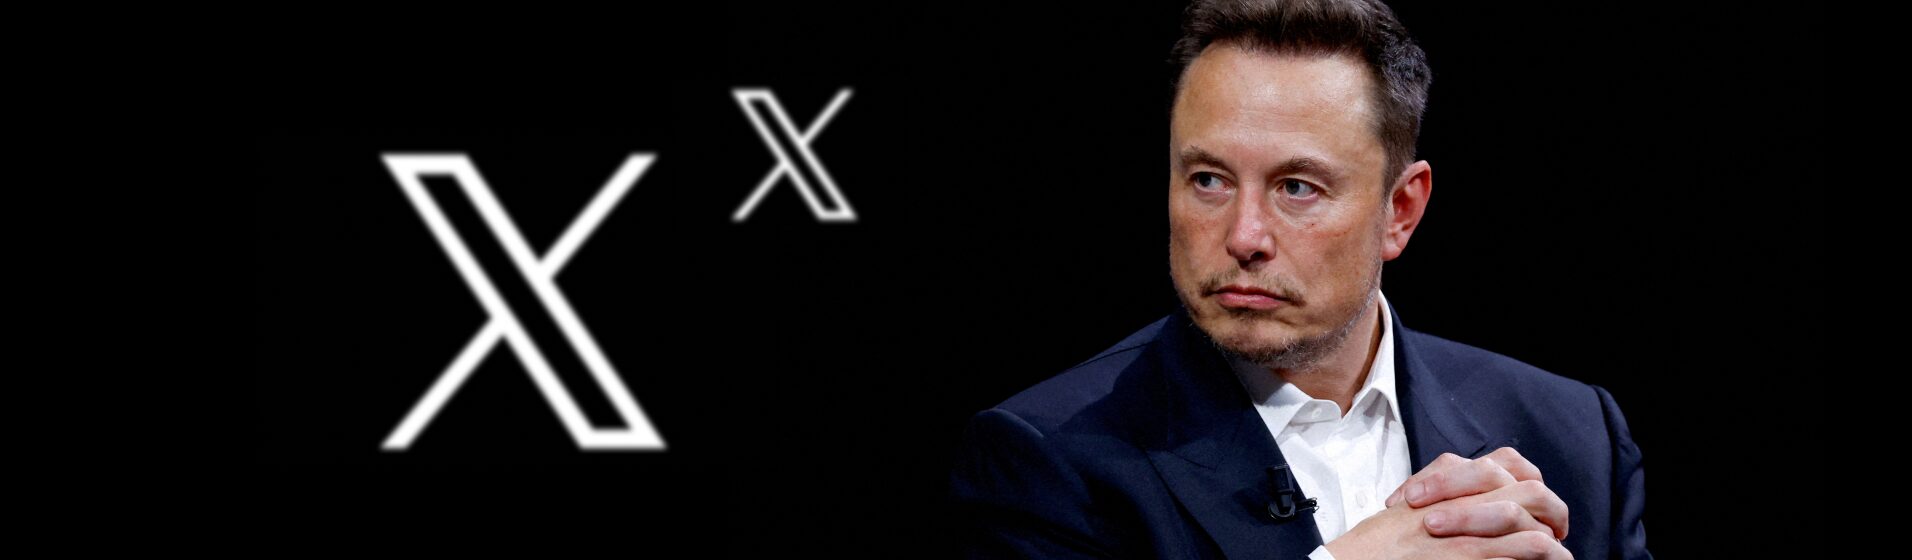 Musk's X Receives Pennsylvania Money License